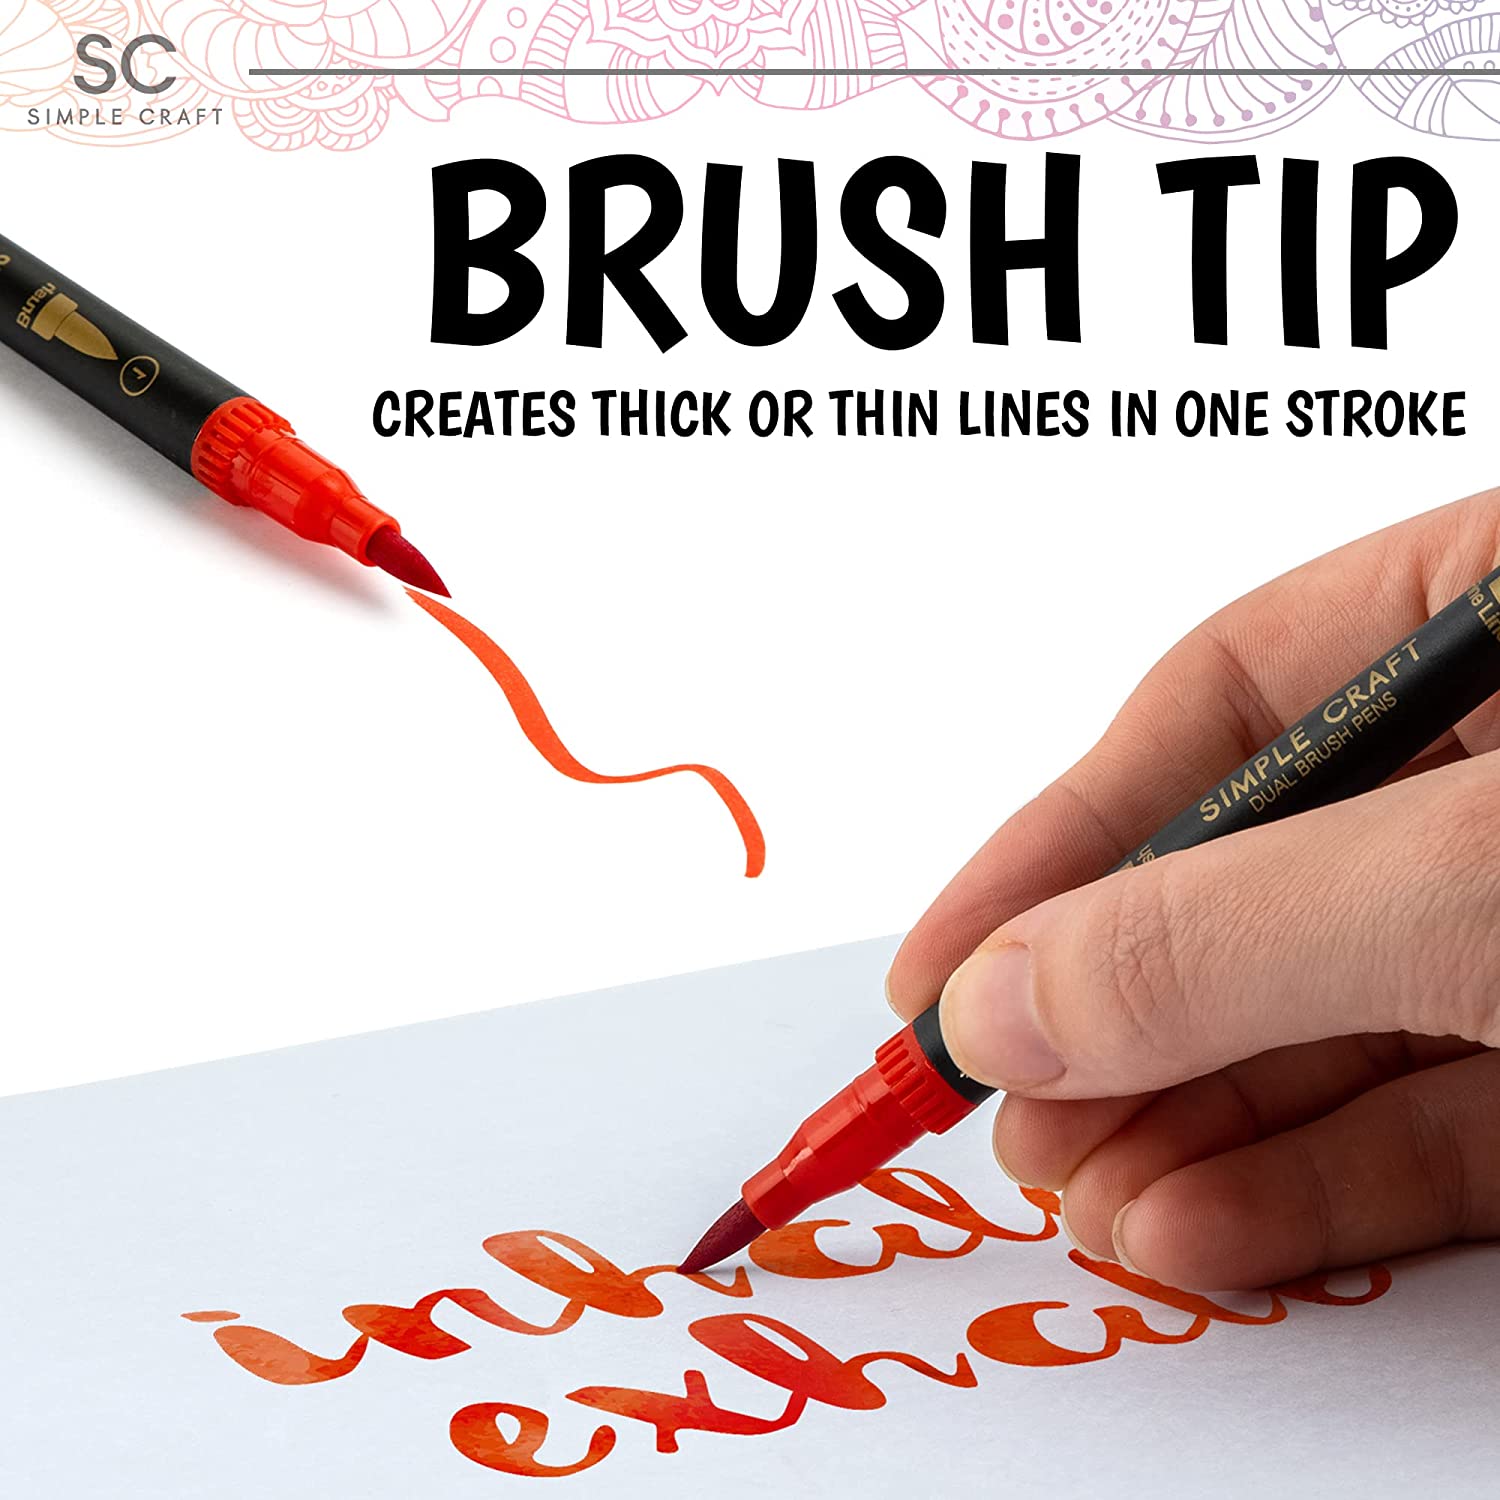 Simple Craft 36 Colored Dual Tip Brush Pens - Dual Fine Tip Brush